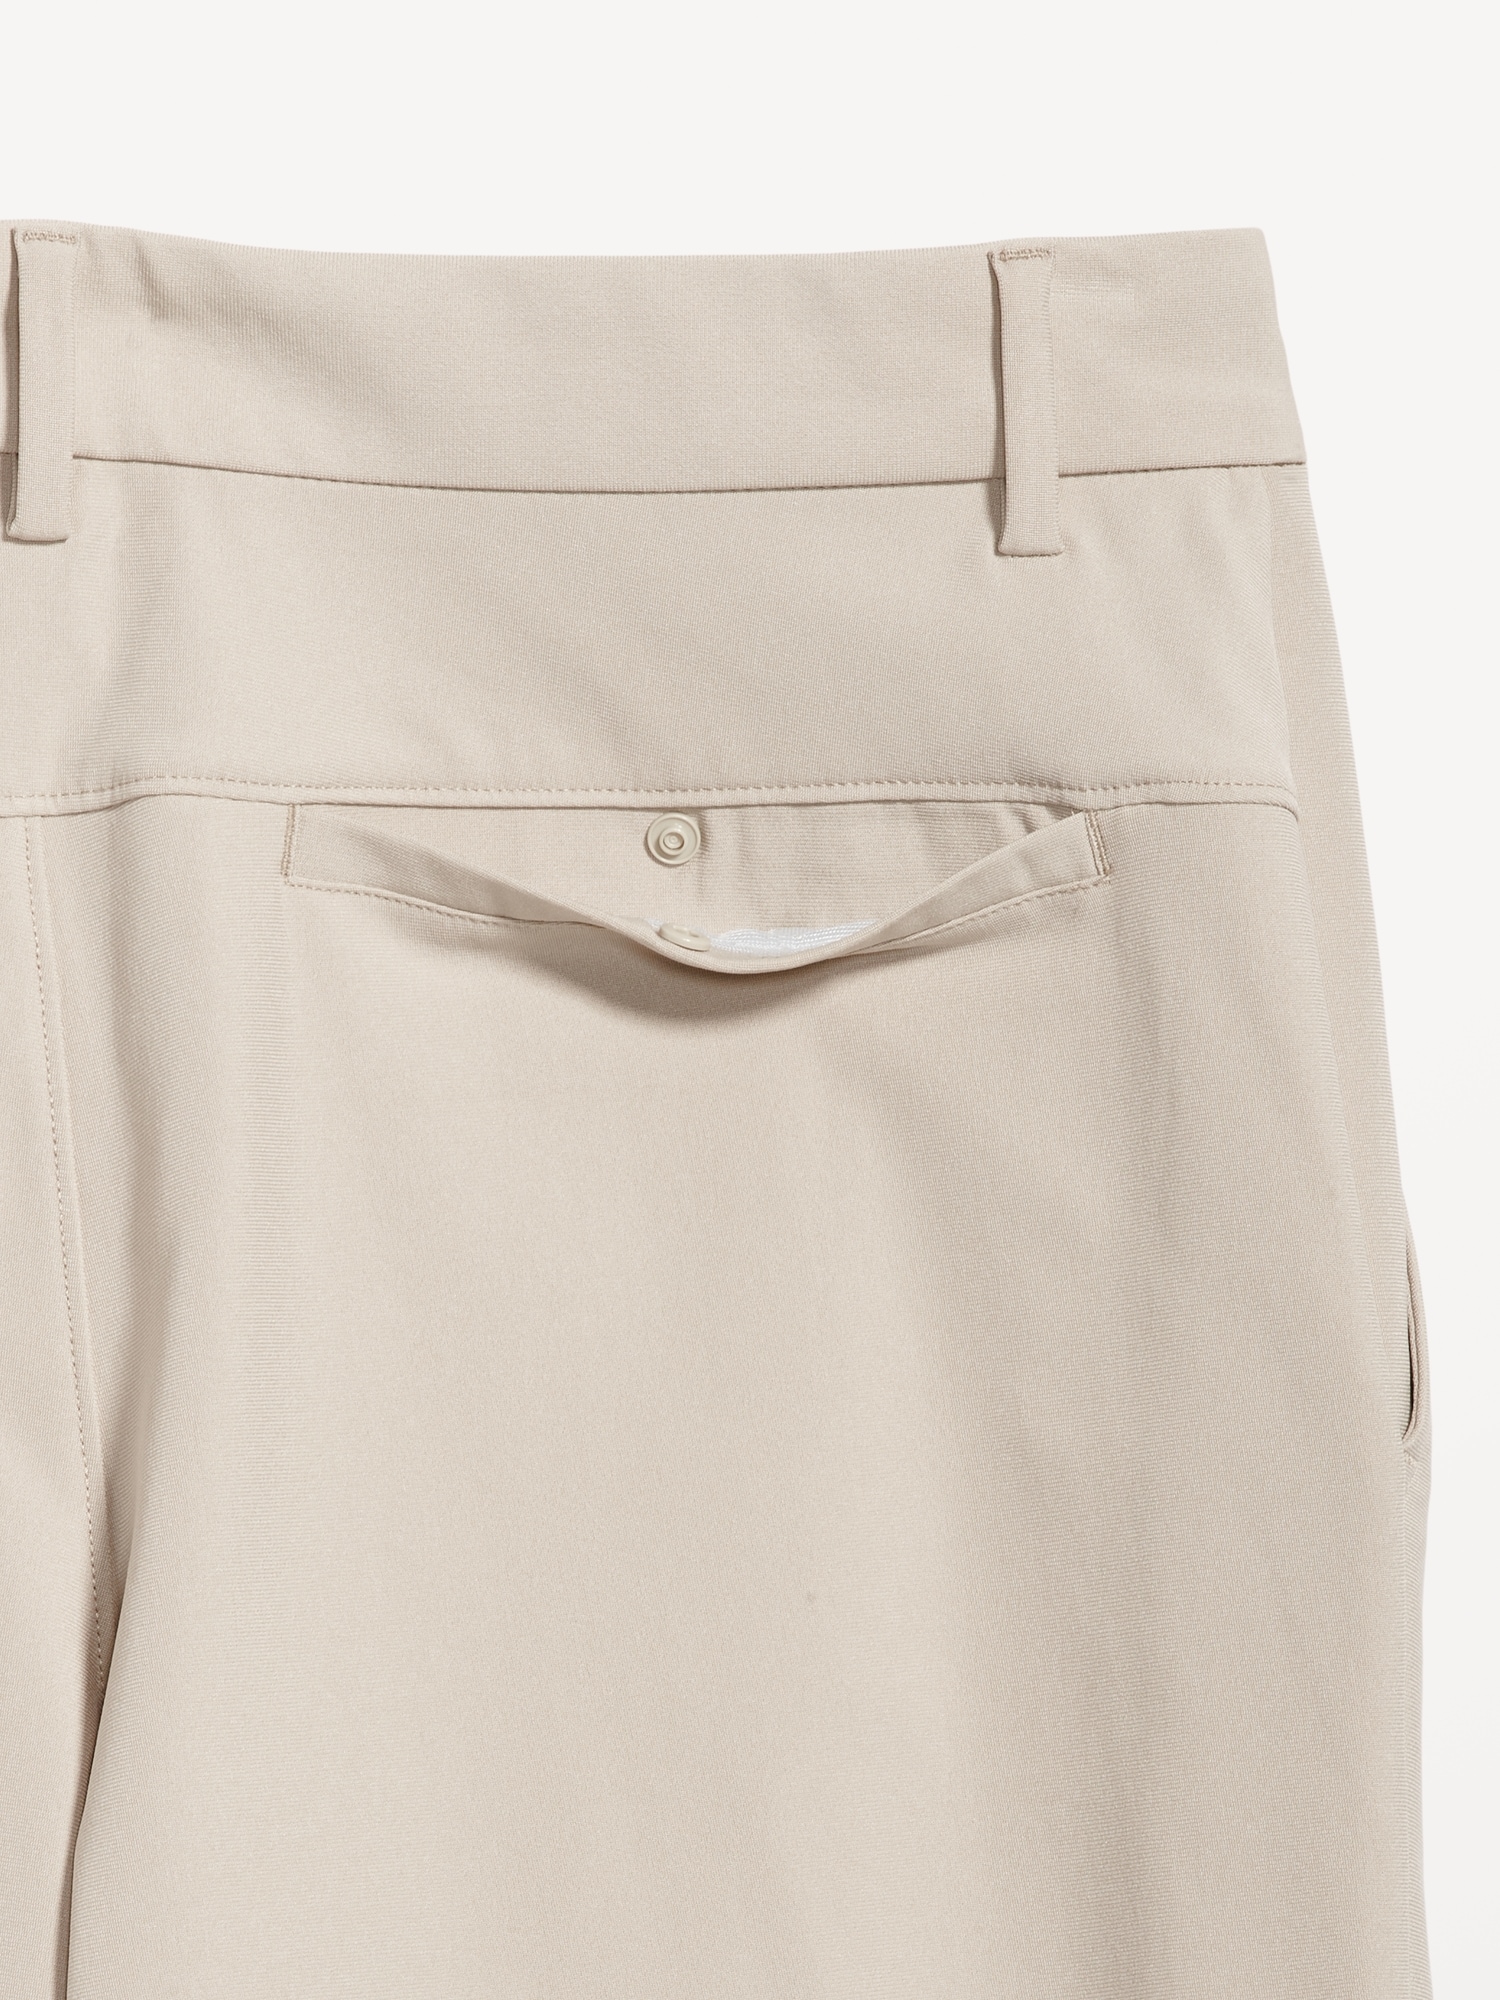 Hybrid Tech Chino Shorts - 8-inch inseam